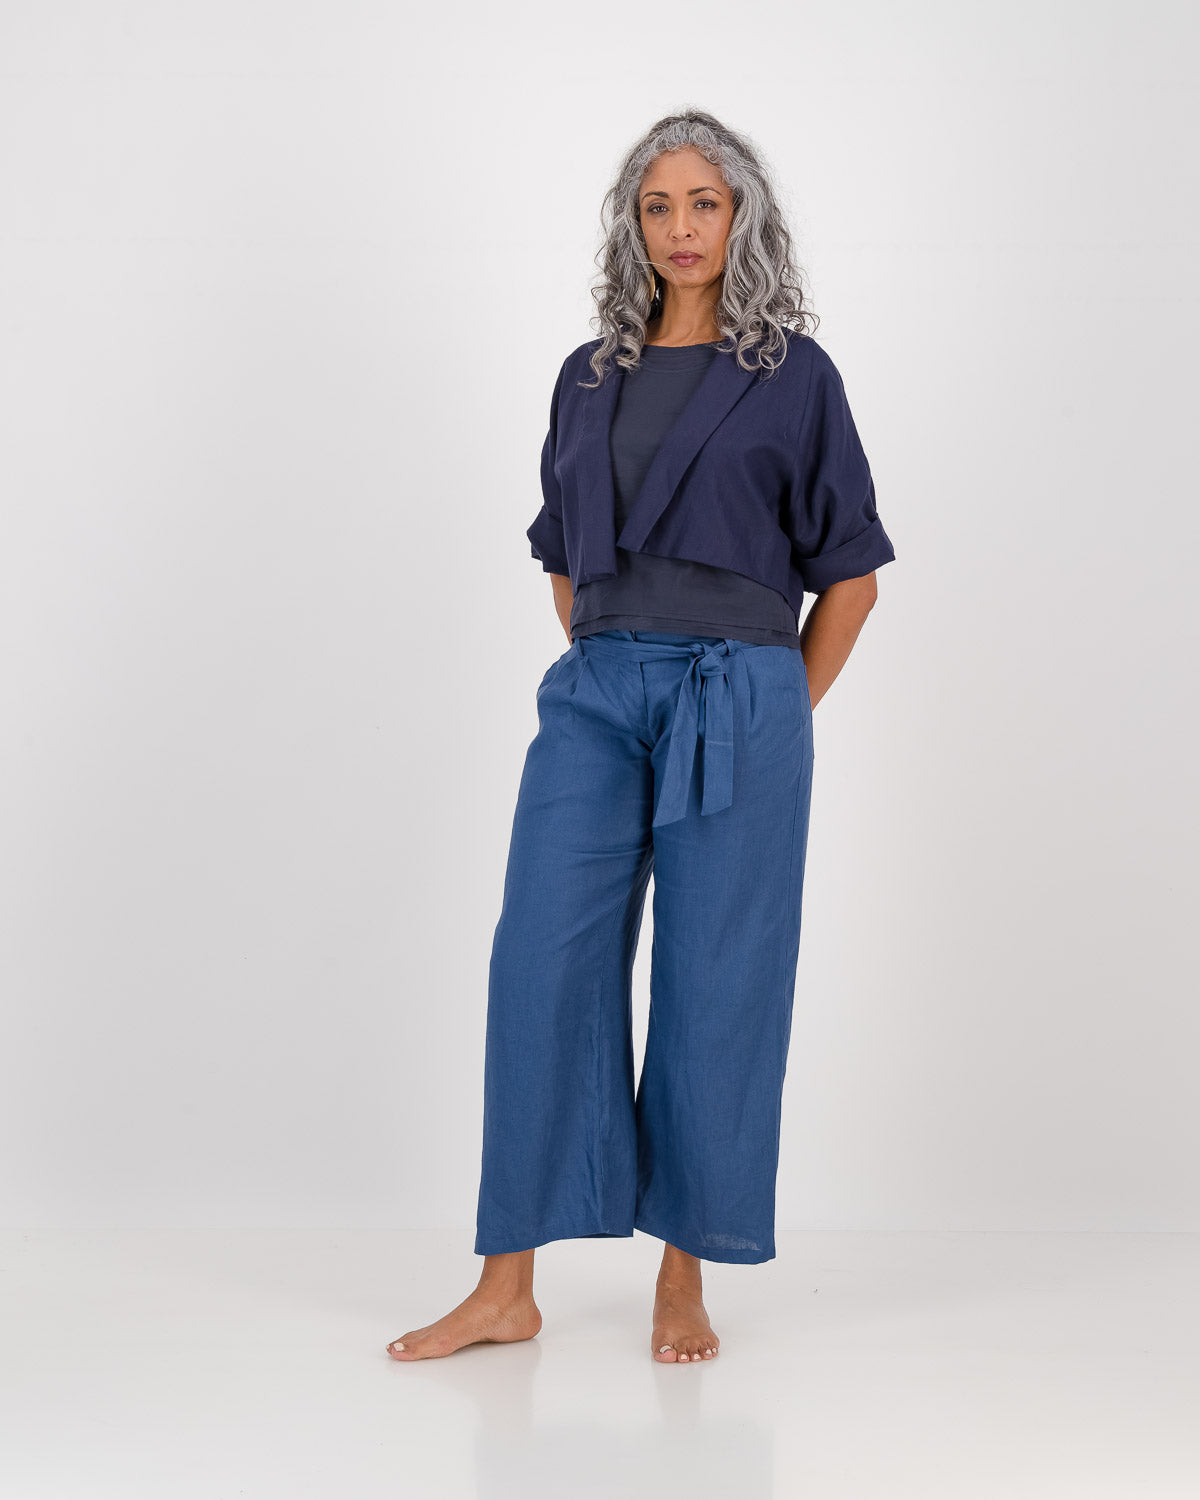 LUNAR clothing, denise culottes - sapphire blue, eco fashion, sustainable